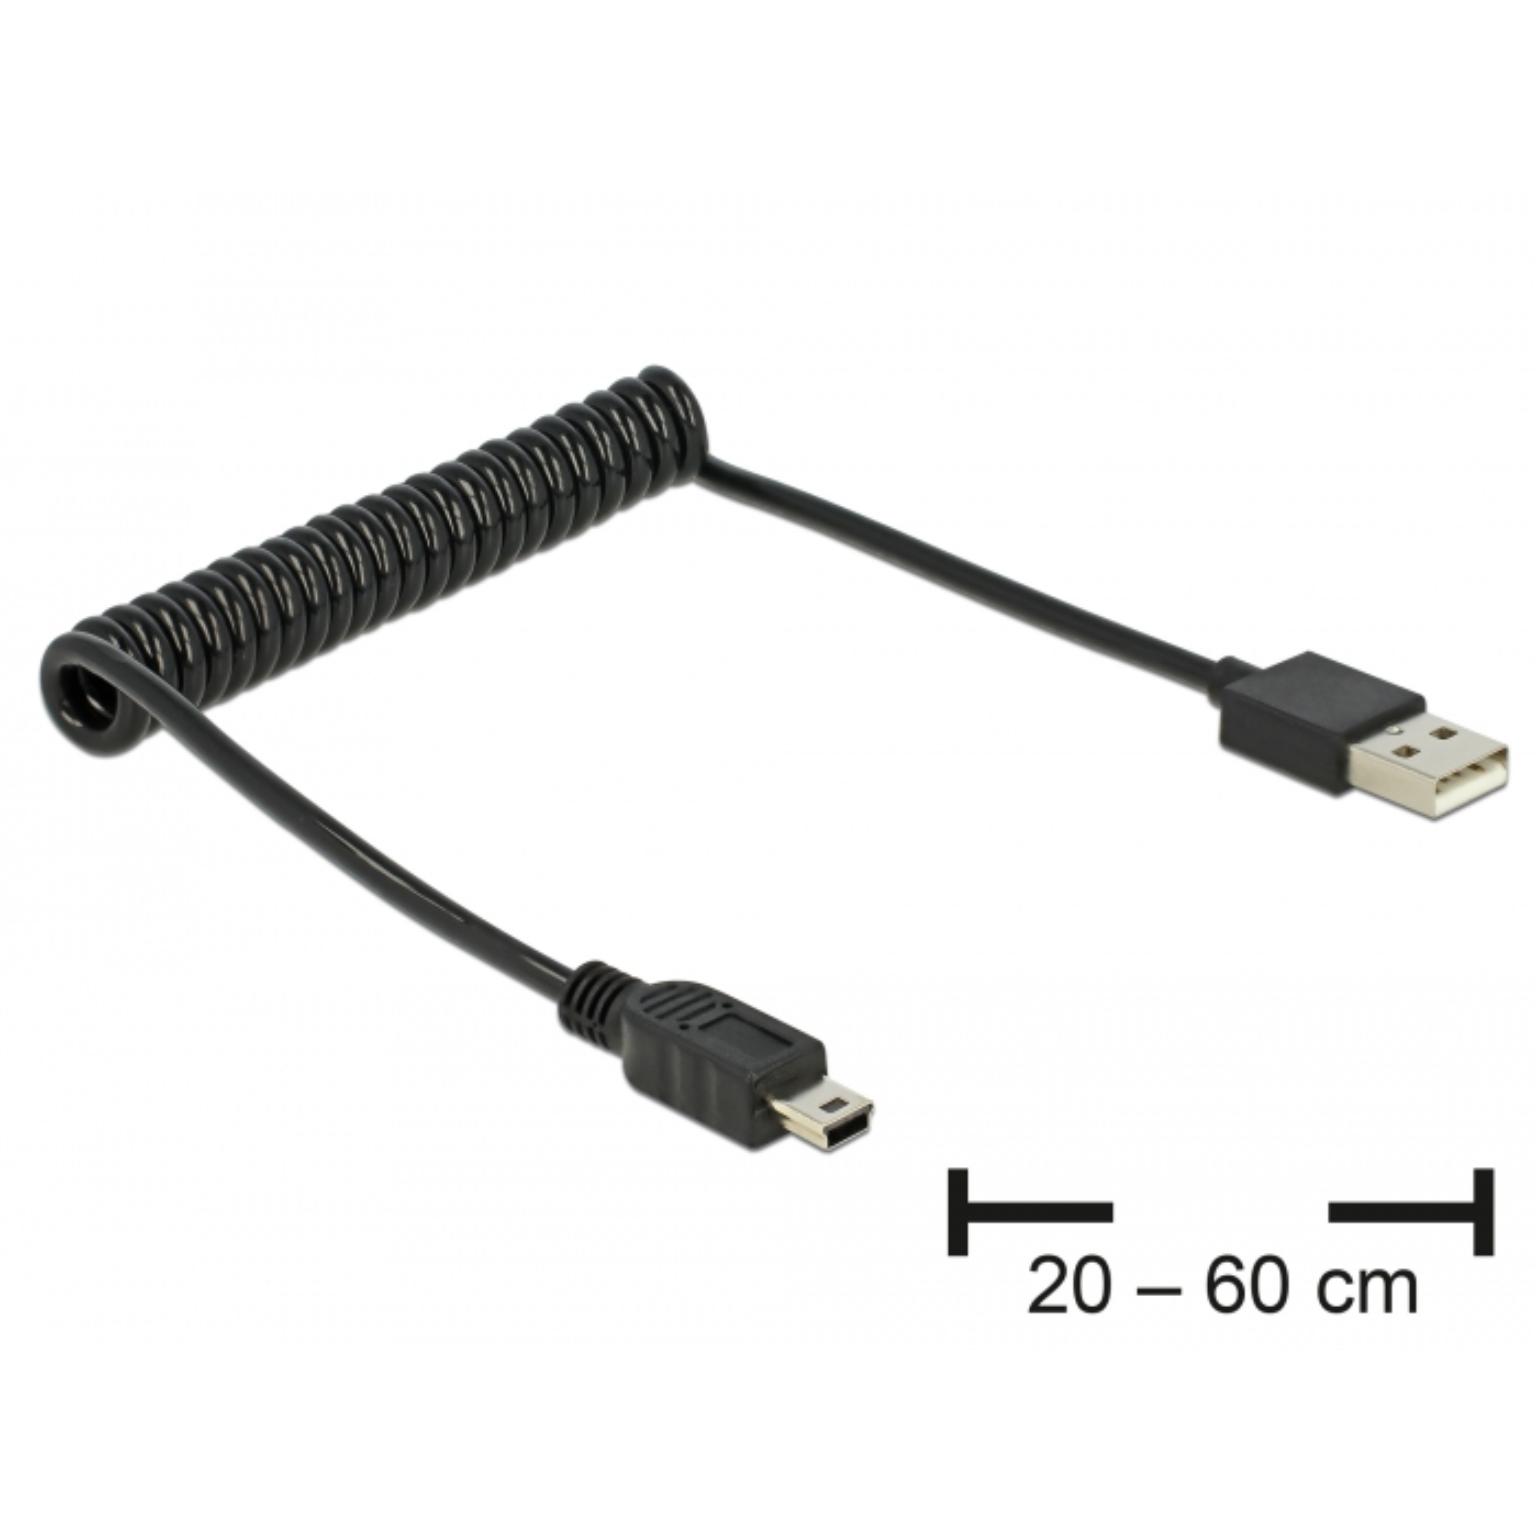 MINI 2.0 SPIRAALKABEL - Mini USB 2.0 spiraalkabel, Connector USB A male, Connector 2: 5p mini USB B male, 0.20 tot 0.60 meter.